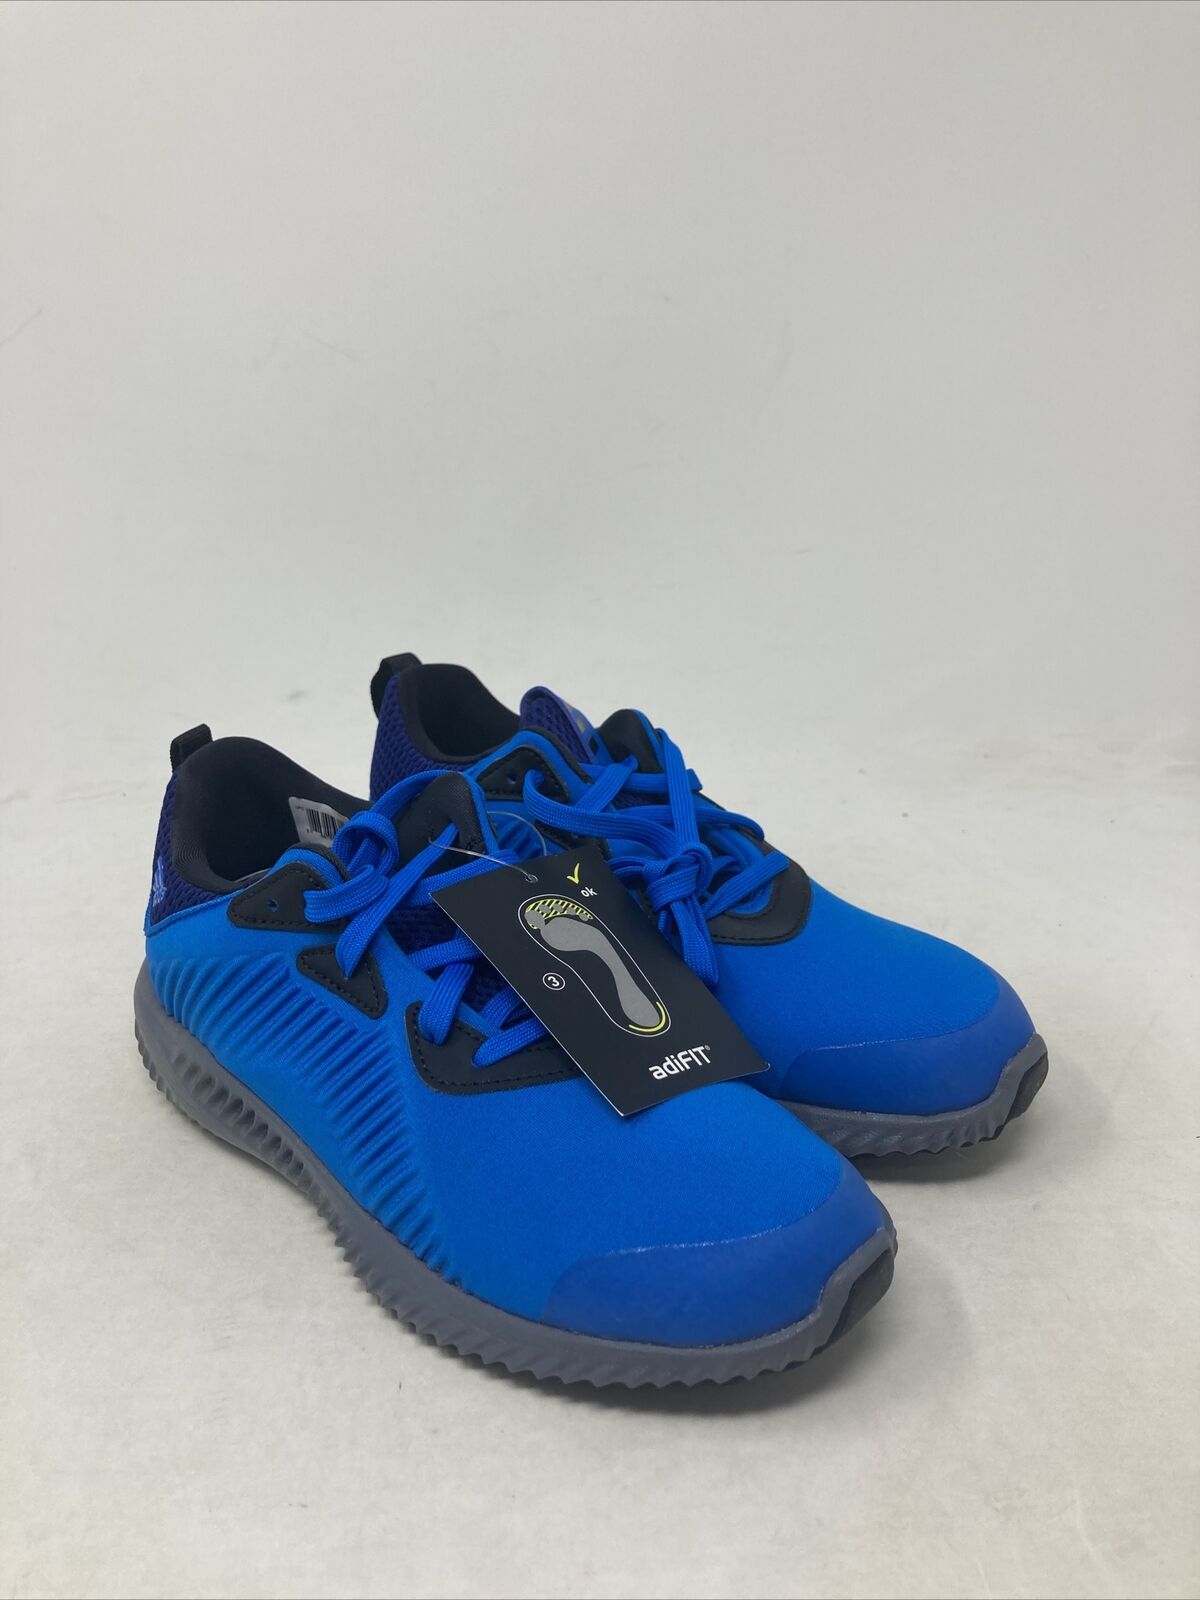 Adidas Kids’ Alphabounce Running Shoes Size 2.5 US Little Kid Blue